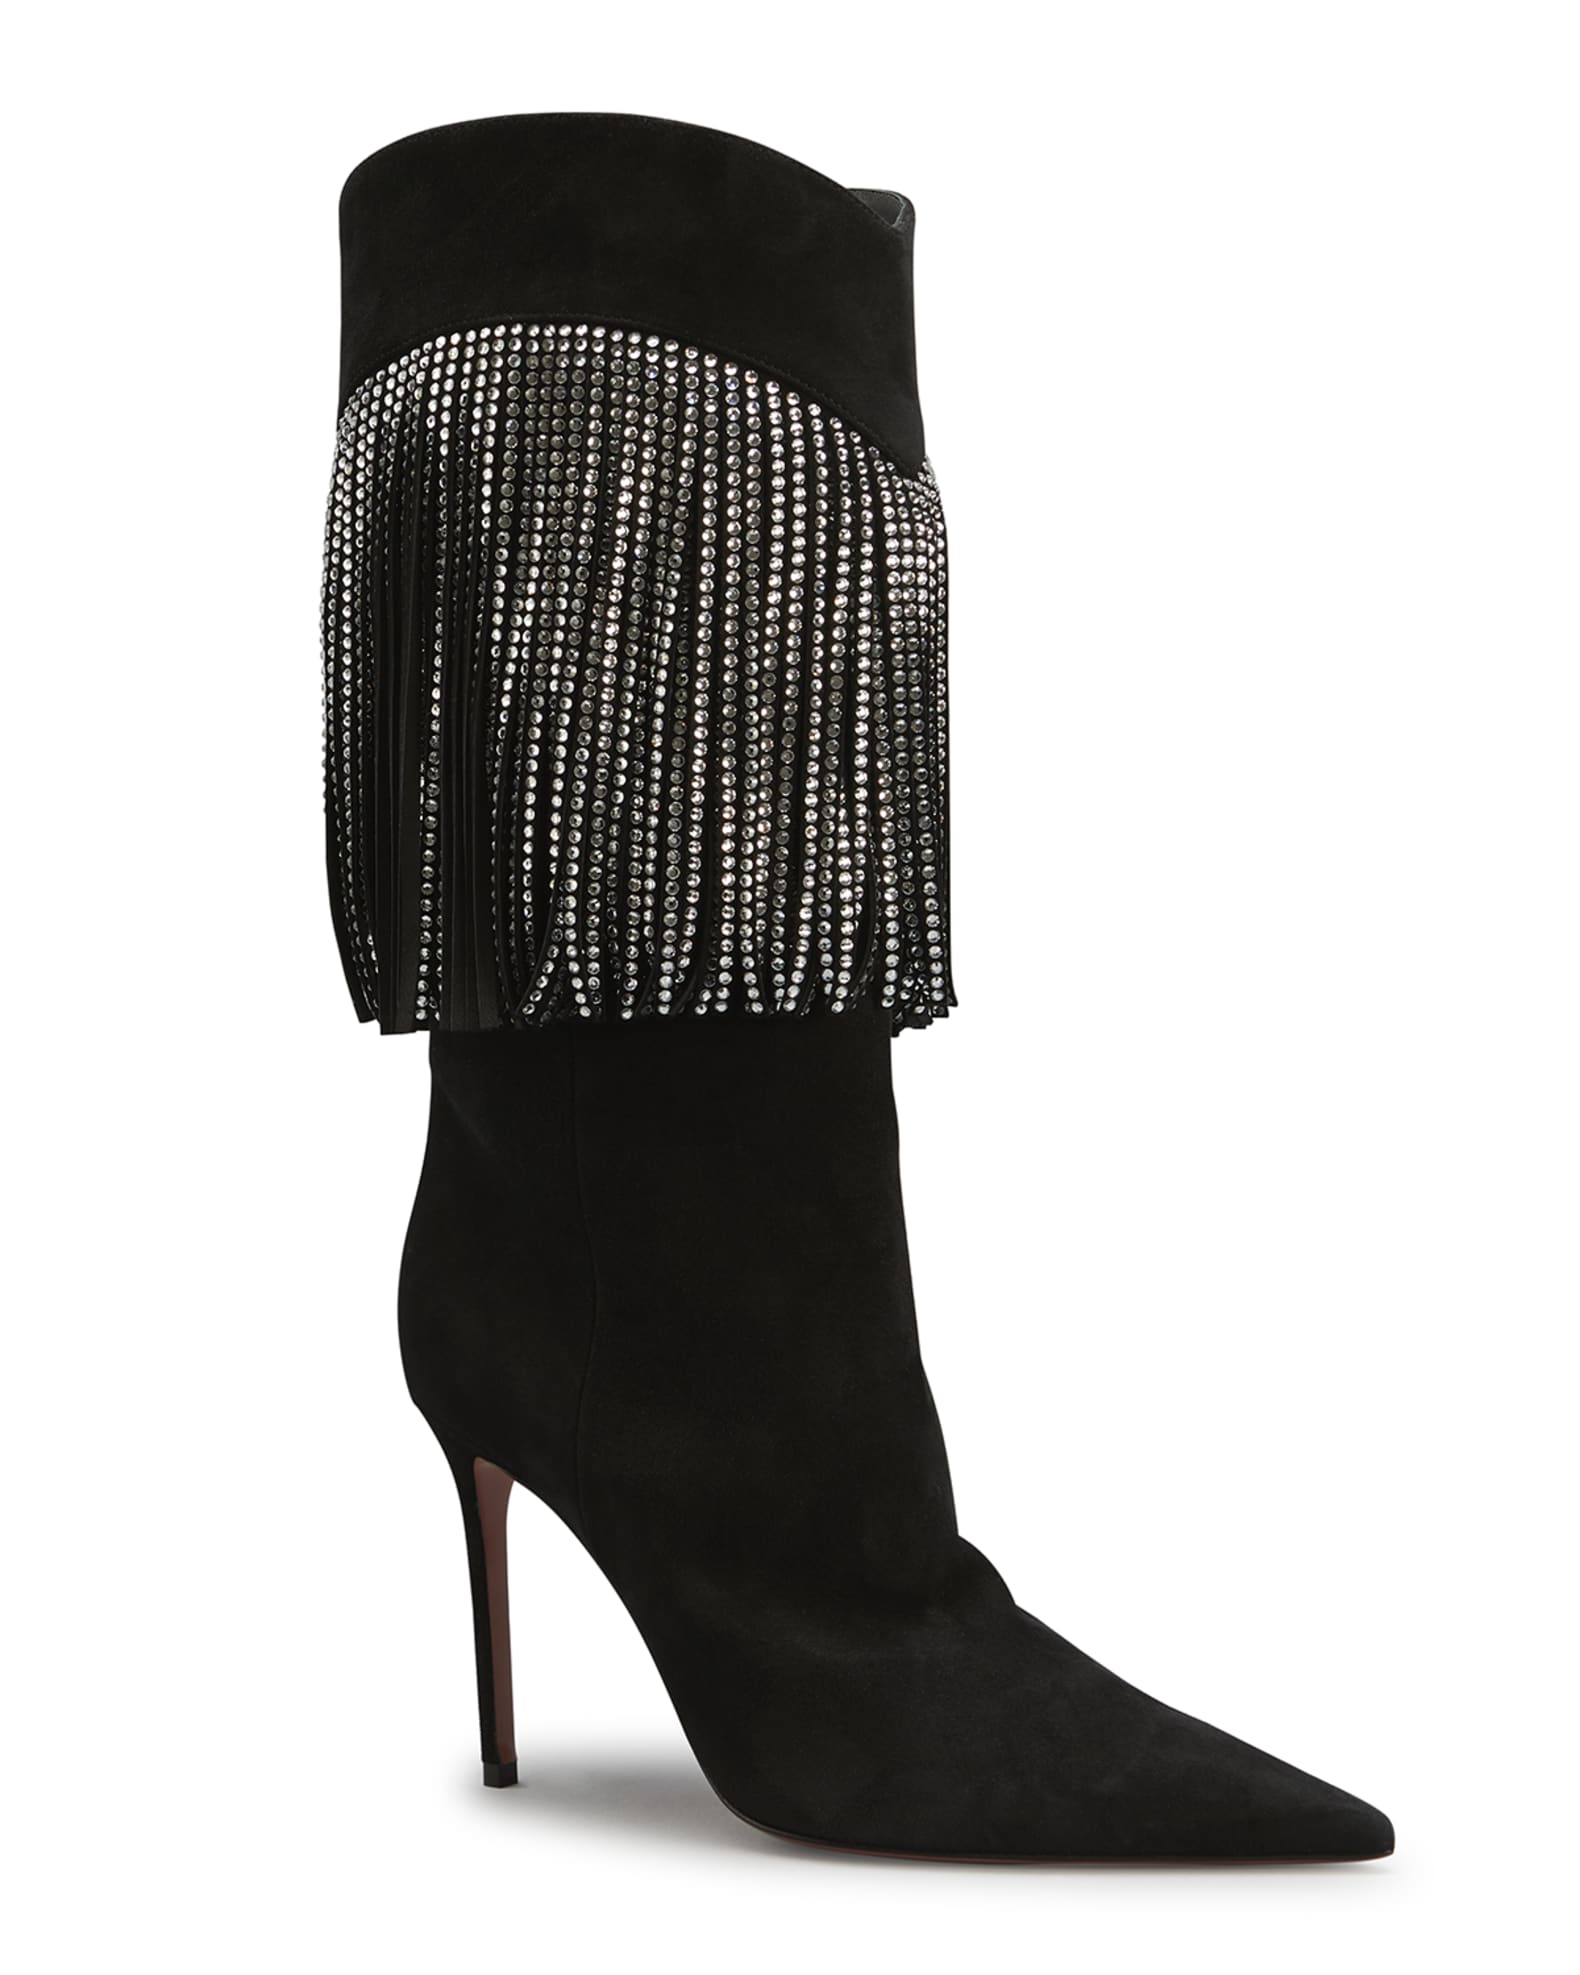 Amina Muaddi Lily Crystal Fringe Stiletto Boots | Neiman Marcus